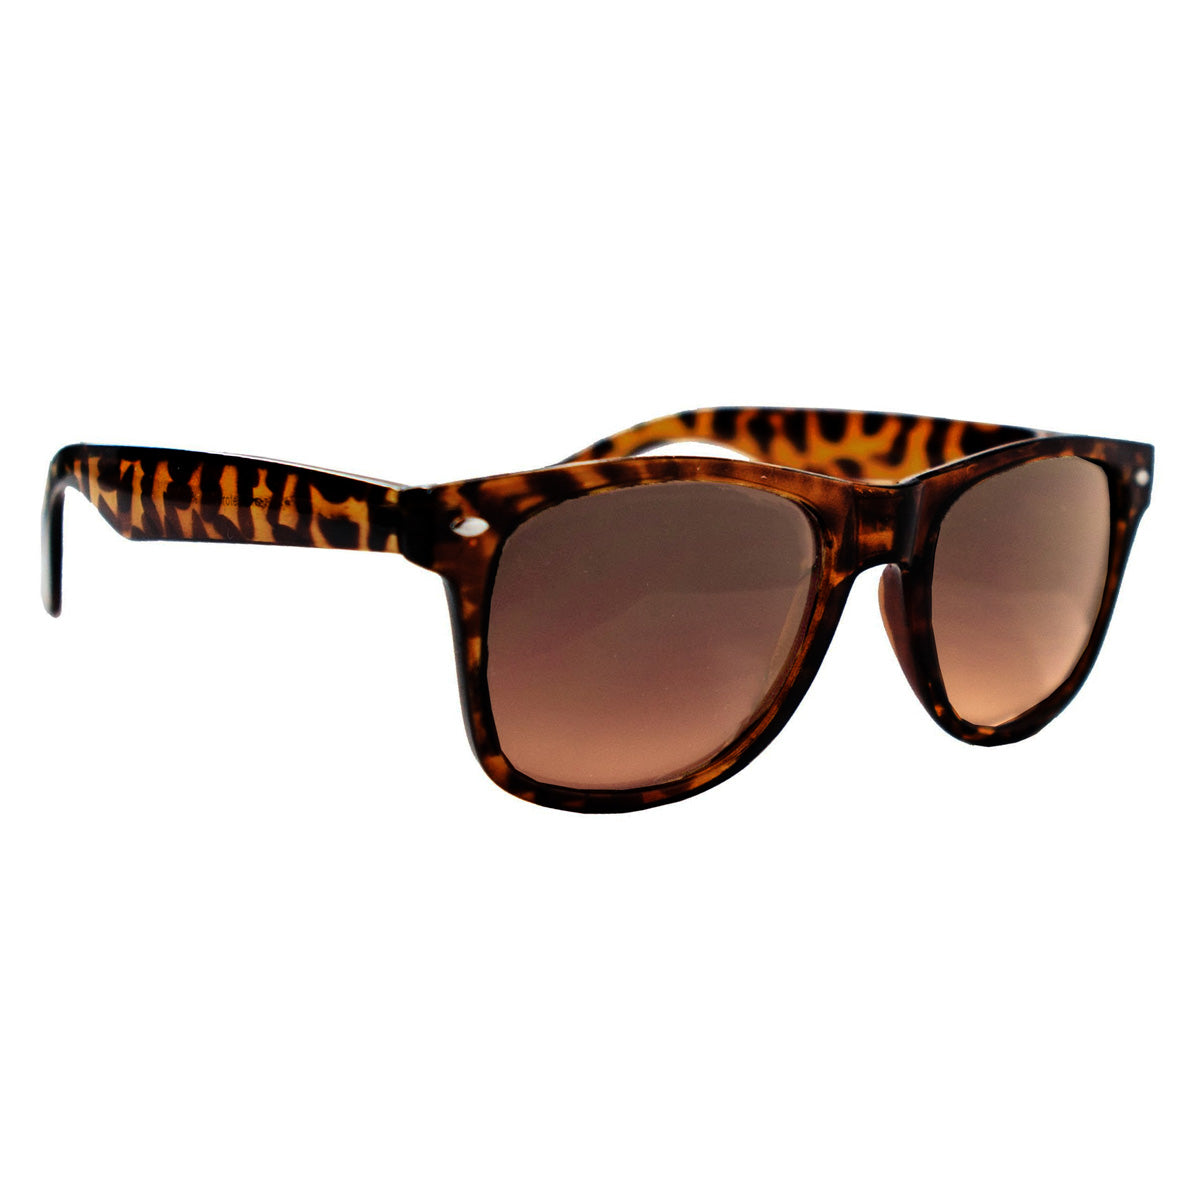 Animal patterned sunglasses